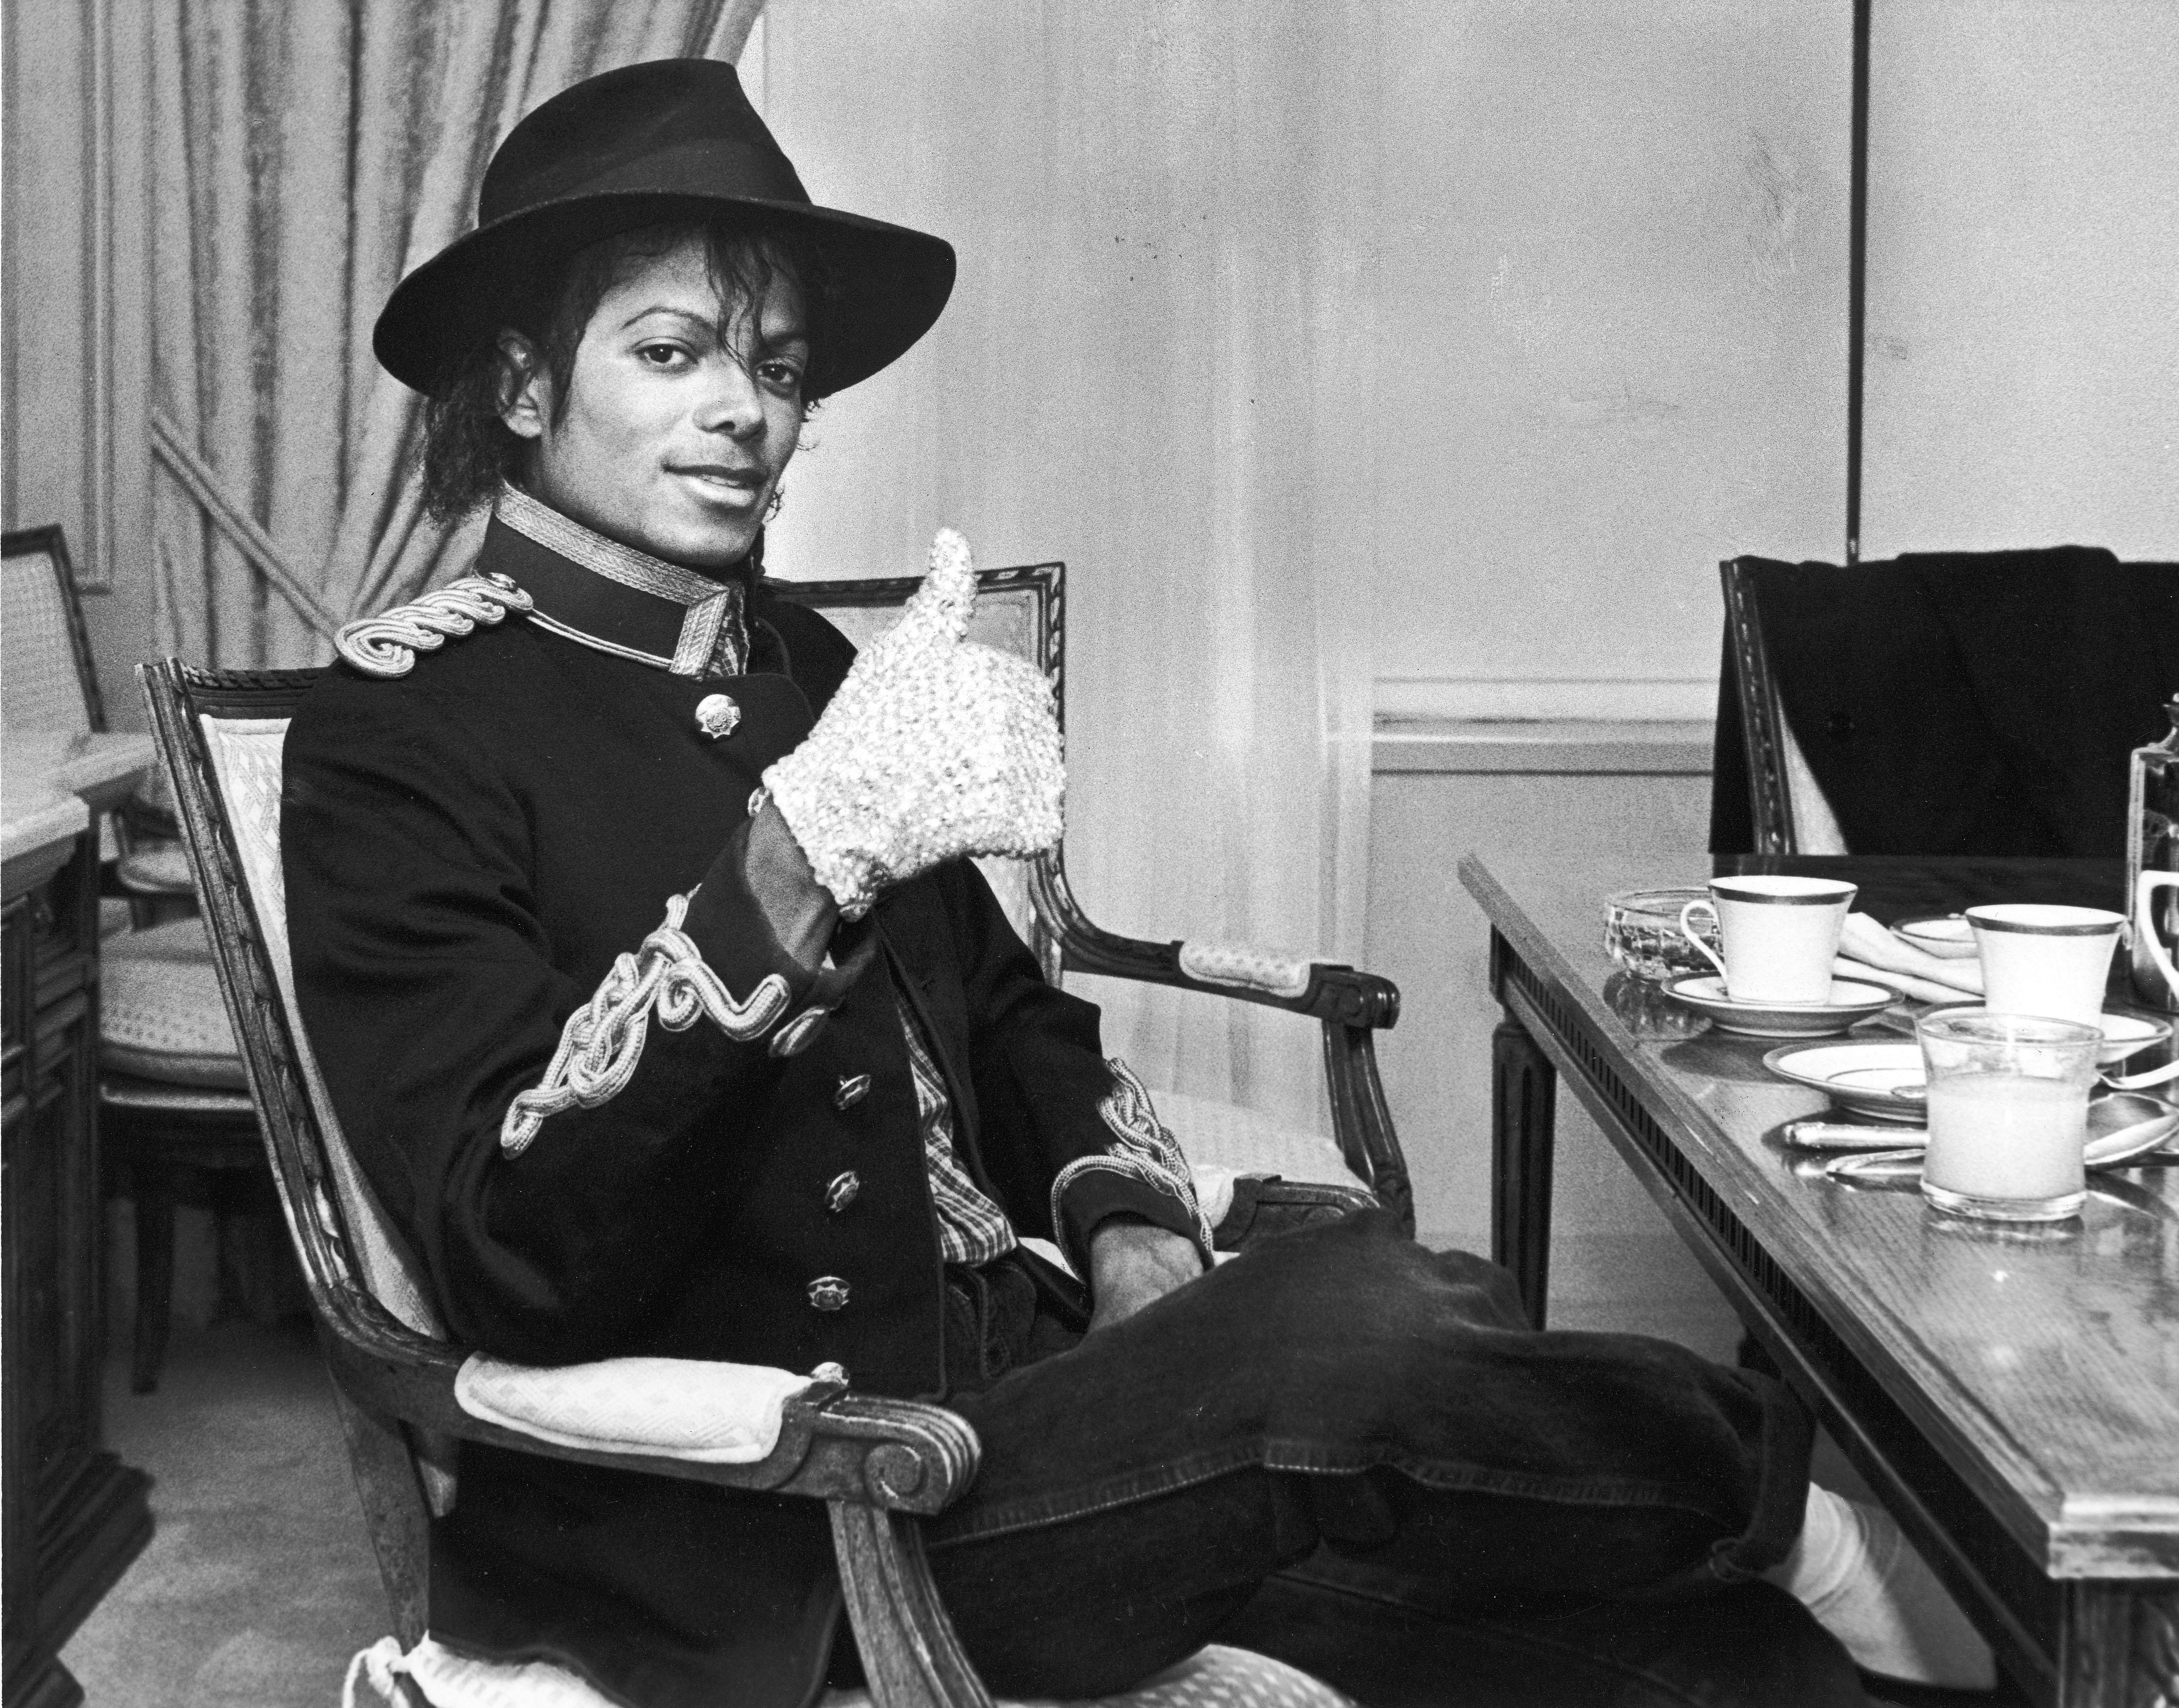 Michael Jackson wearing his iconic glove